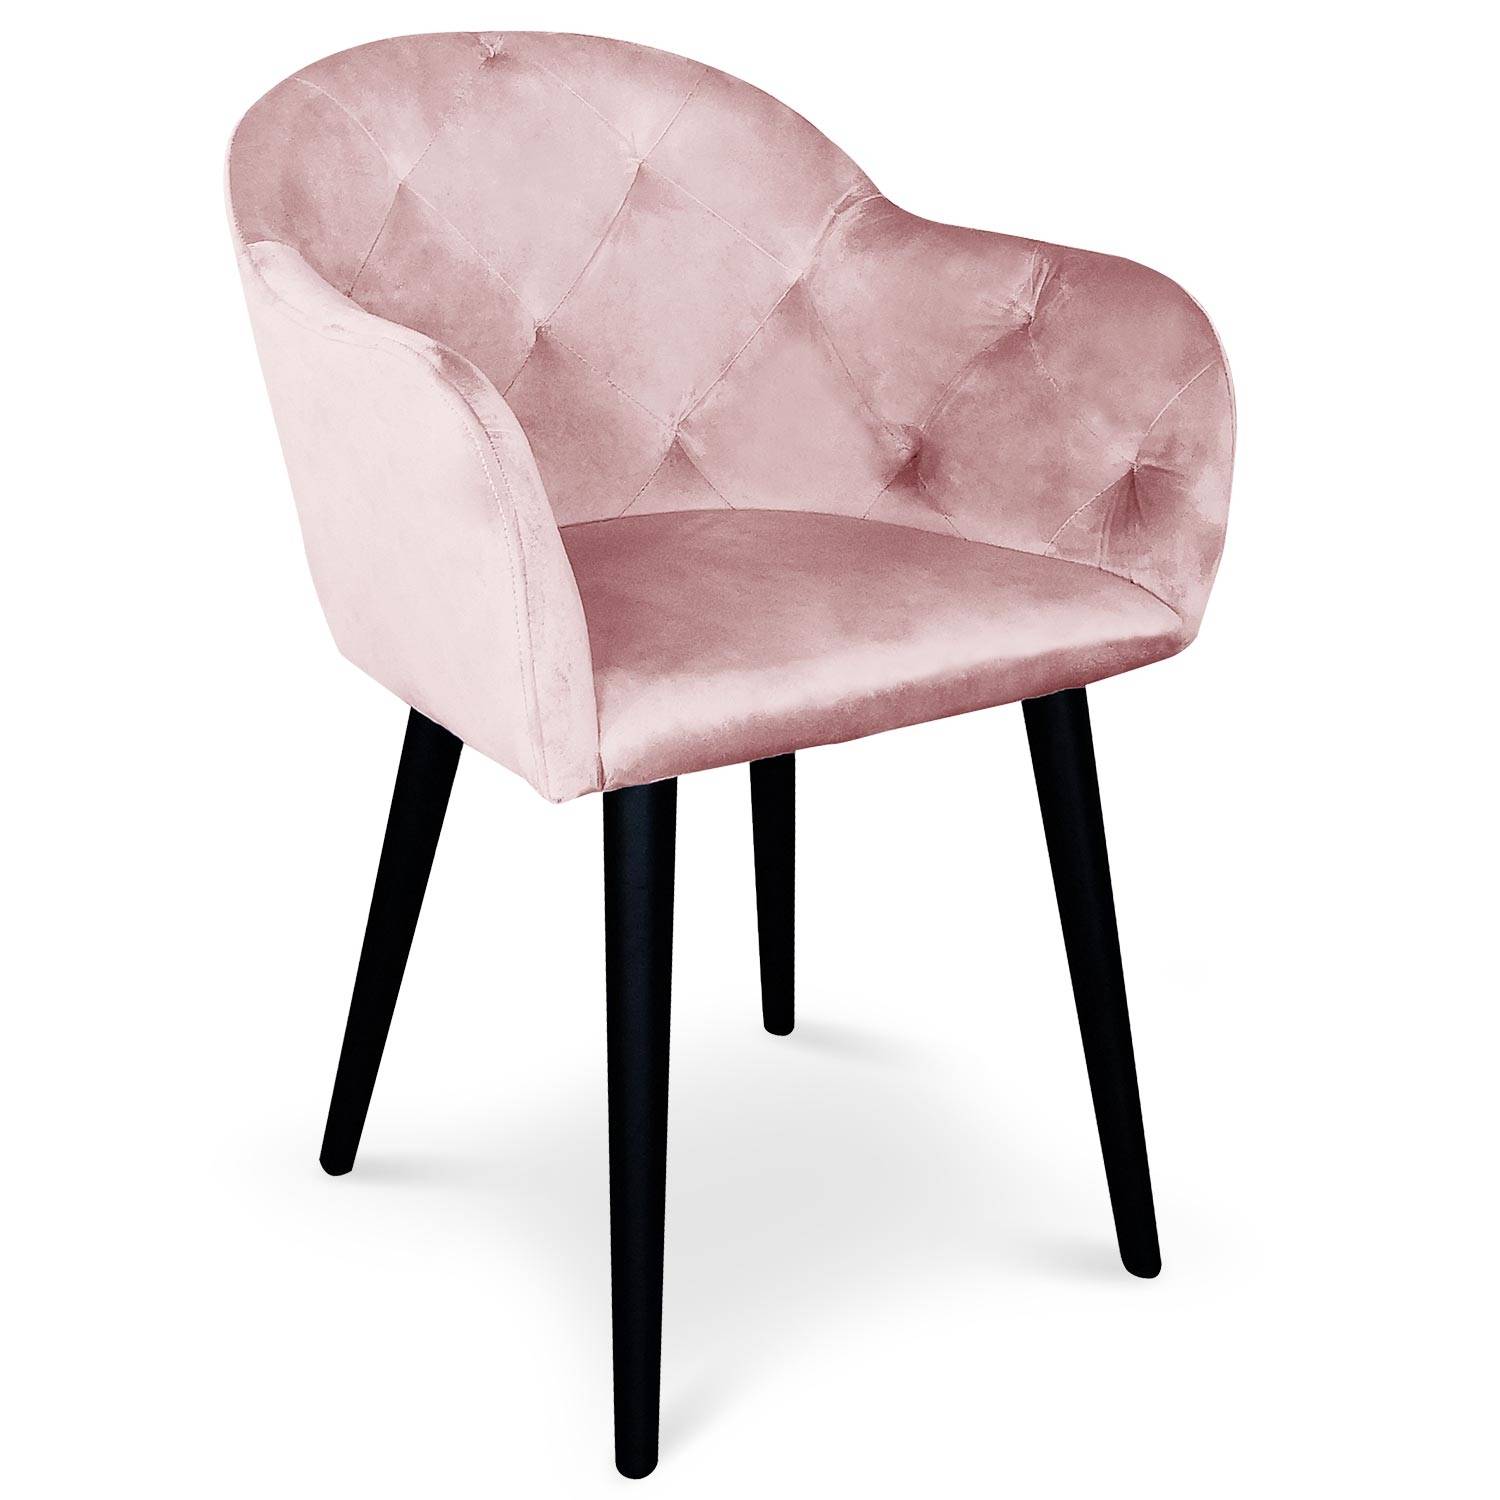 Centimeter Gemengd opslag Honorine stoel / fauteuil roze fluweel